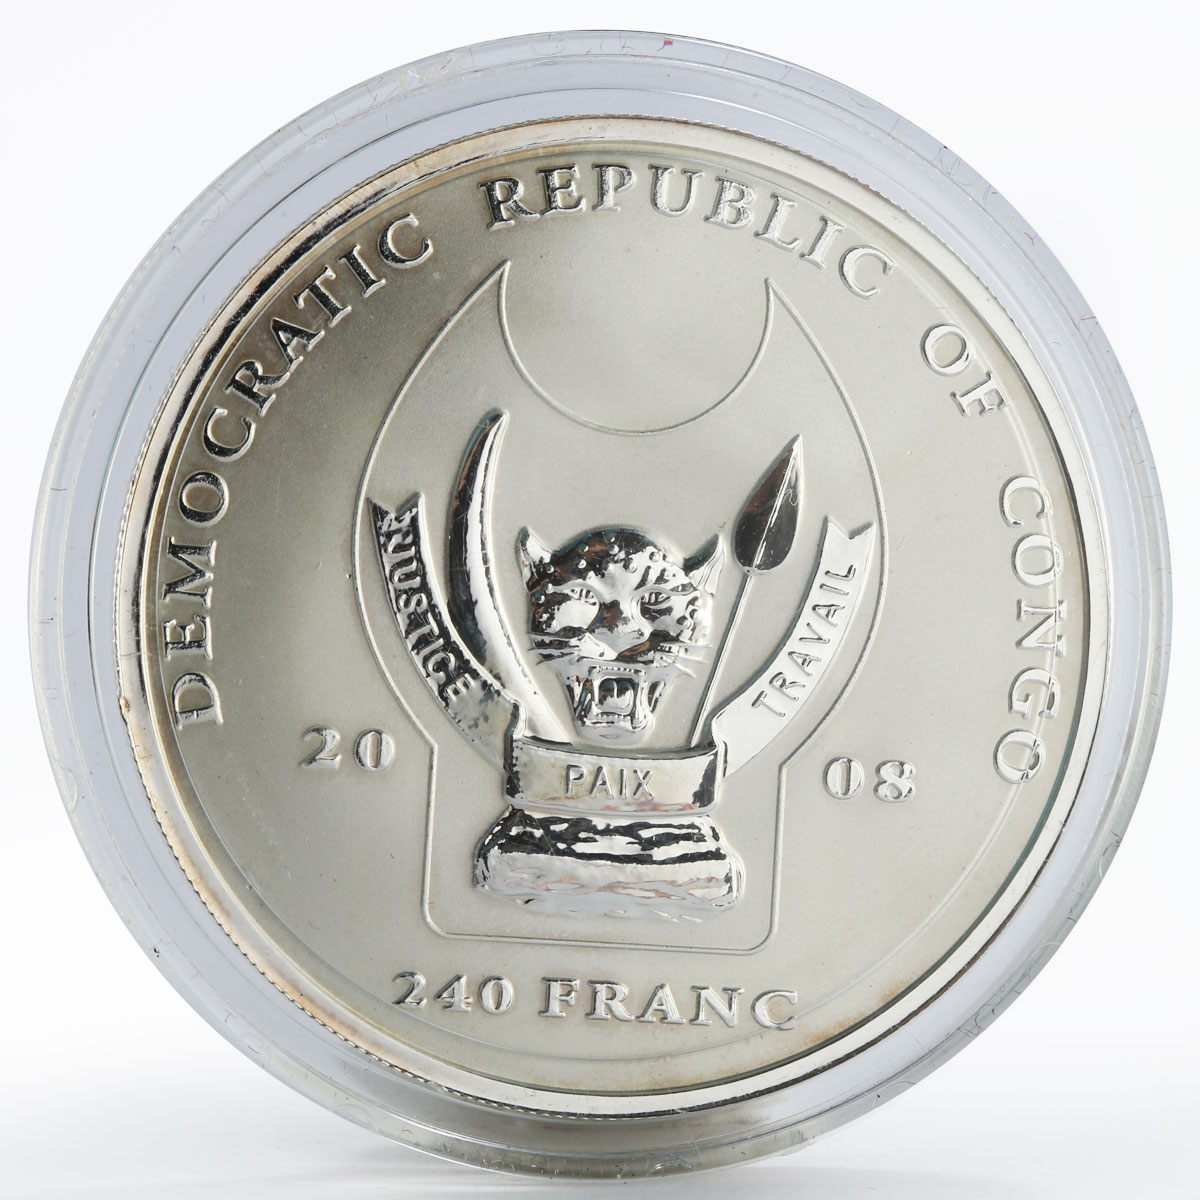 Congo 240 francs Big Five Africa Buffalo colored silver coin 2008